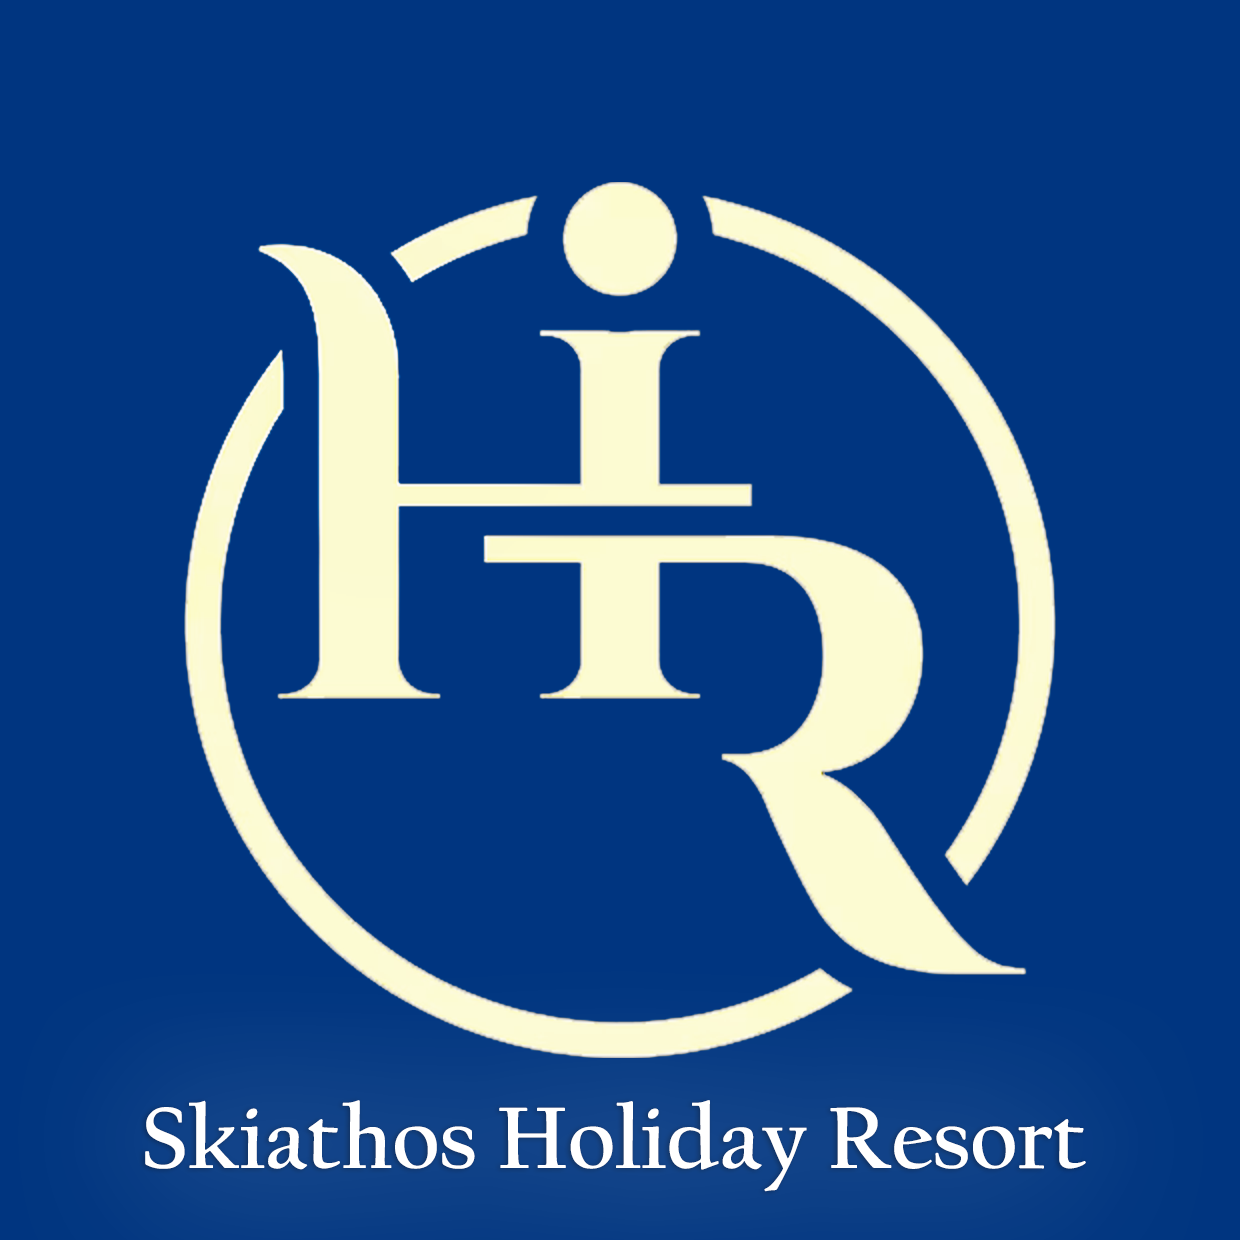 Skiathos Holiday Resort | Privacy Policy - Skiathos Holiday Resort